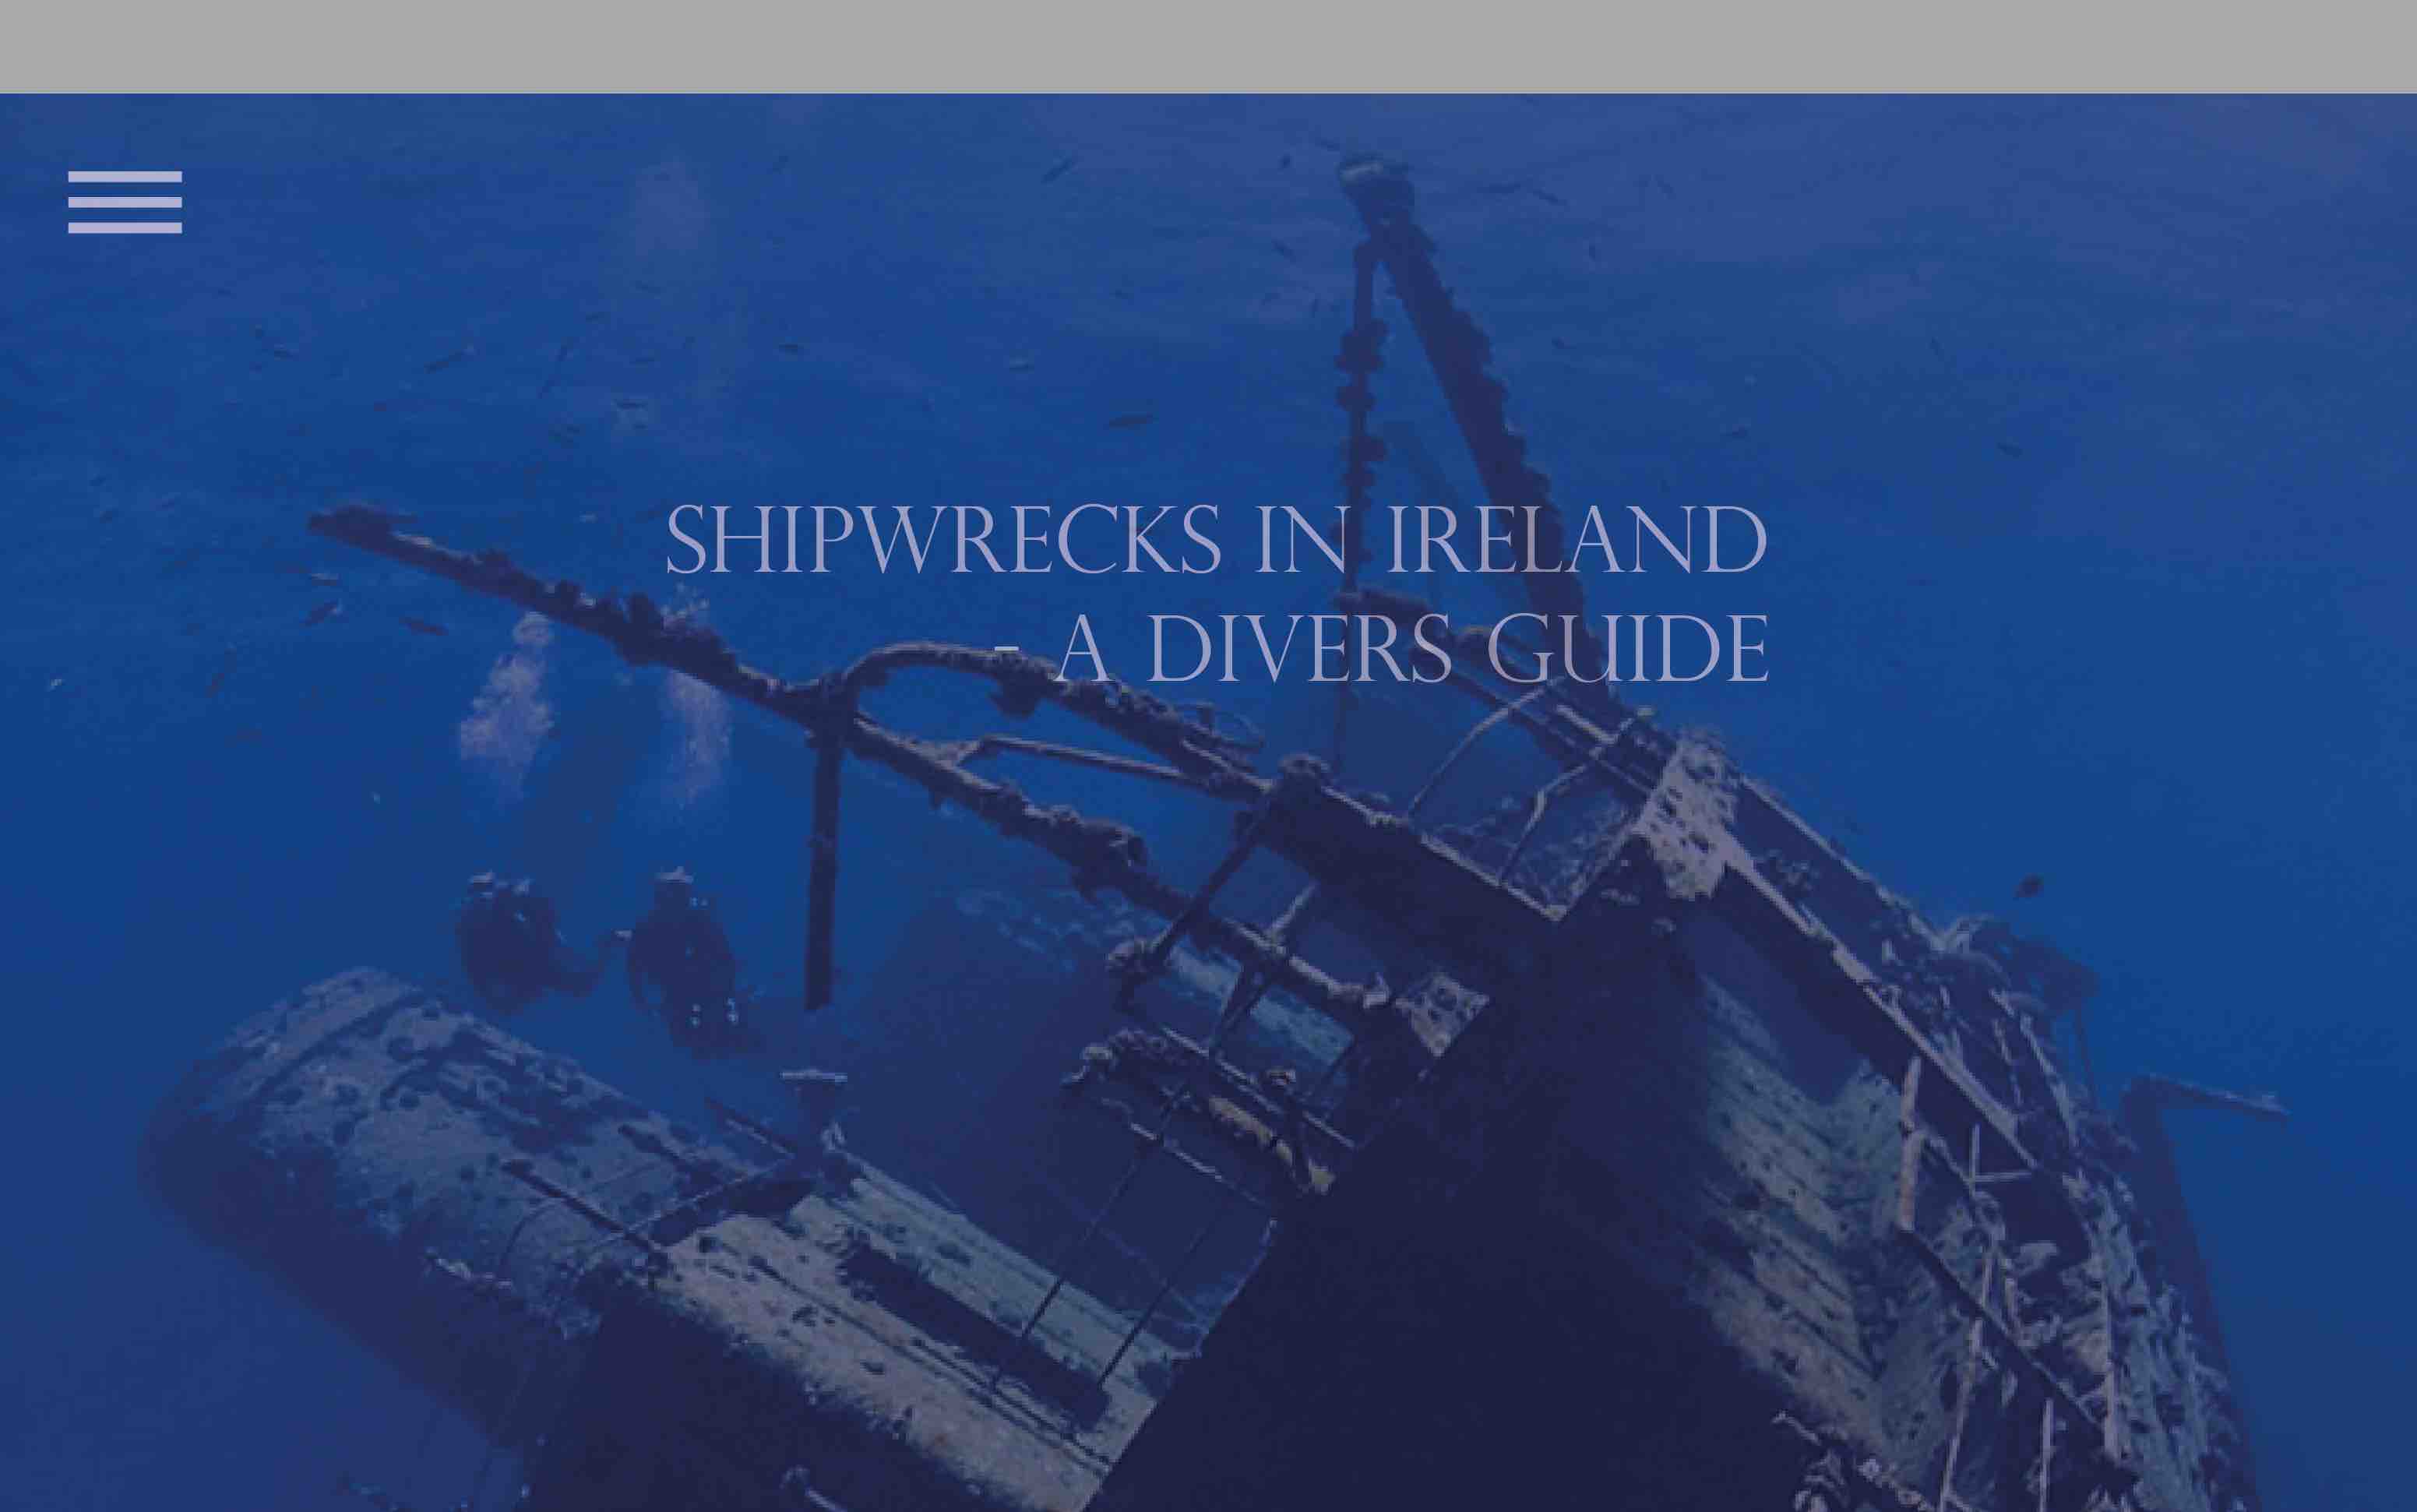 Shipwrecks in Ireland website design improvement.